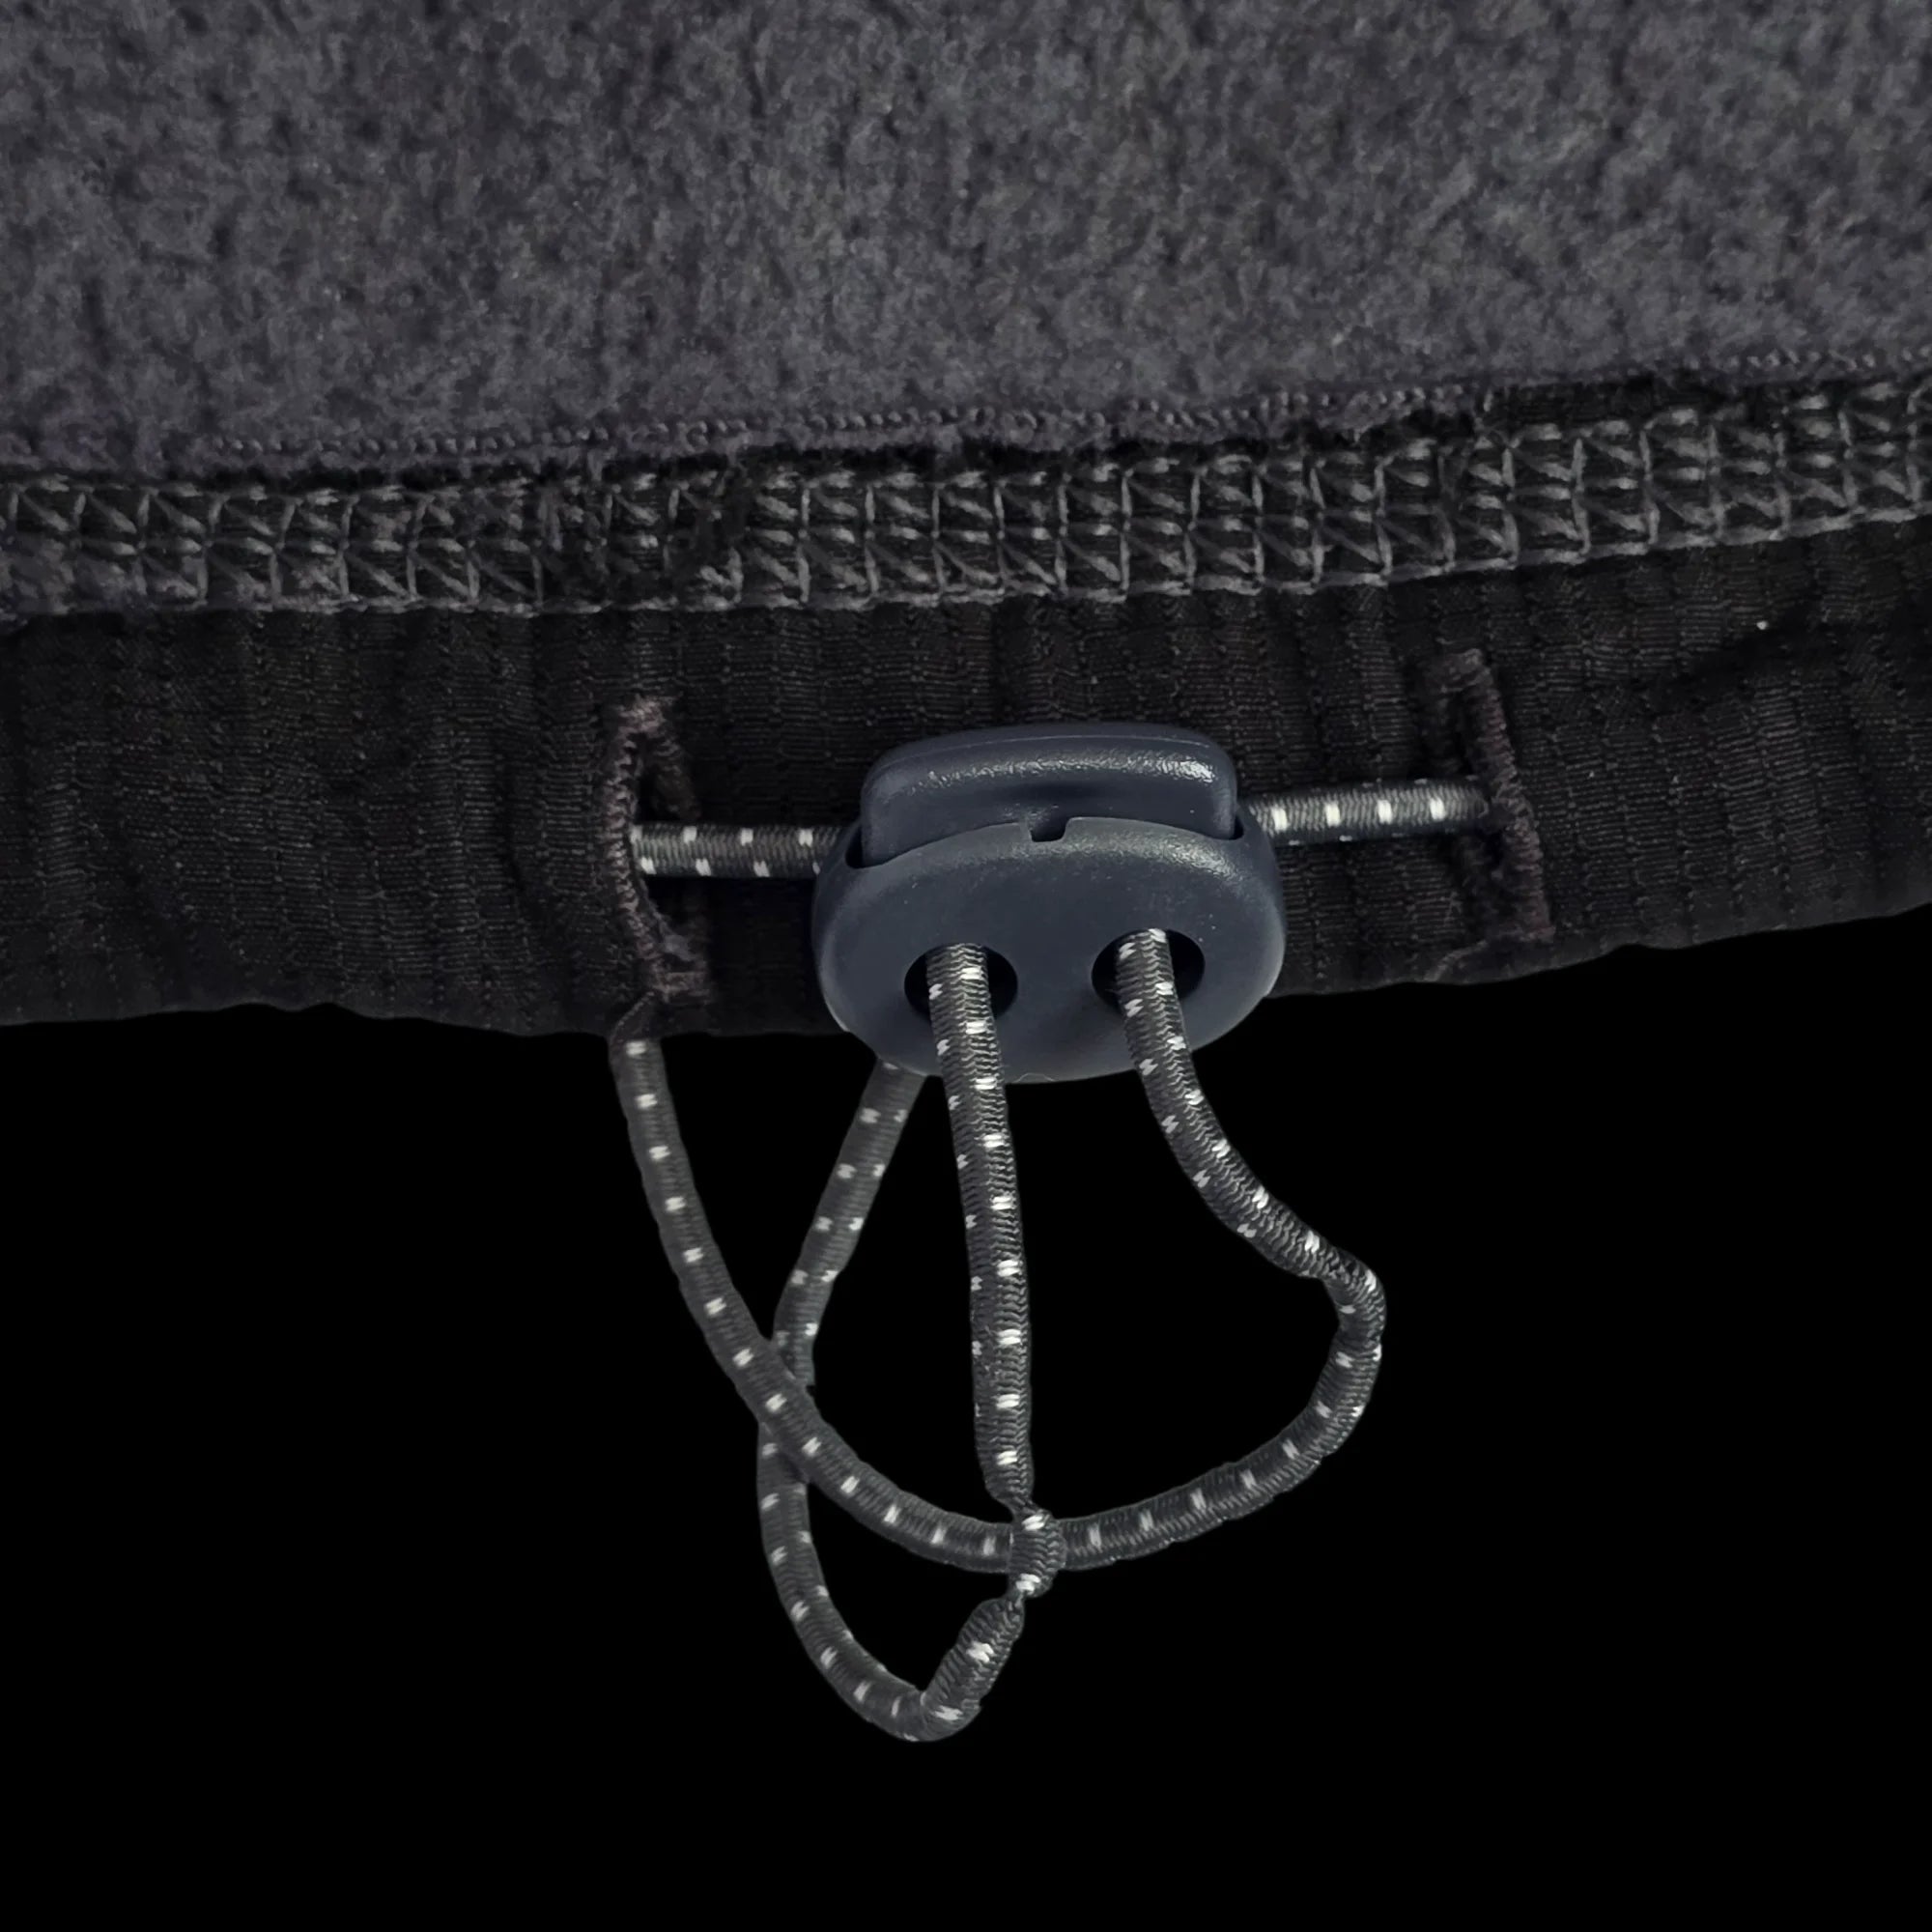 Unisex Starter Black Grey Fleece Jacket UK XL - Coats &